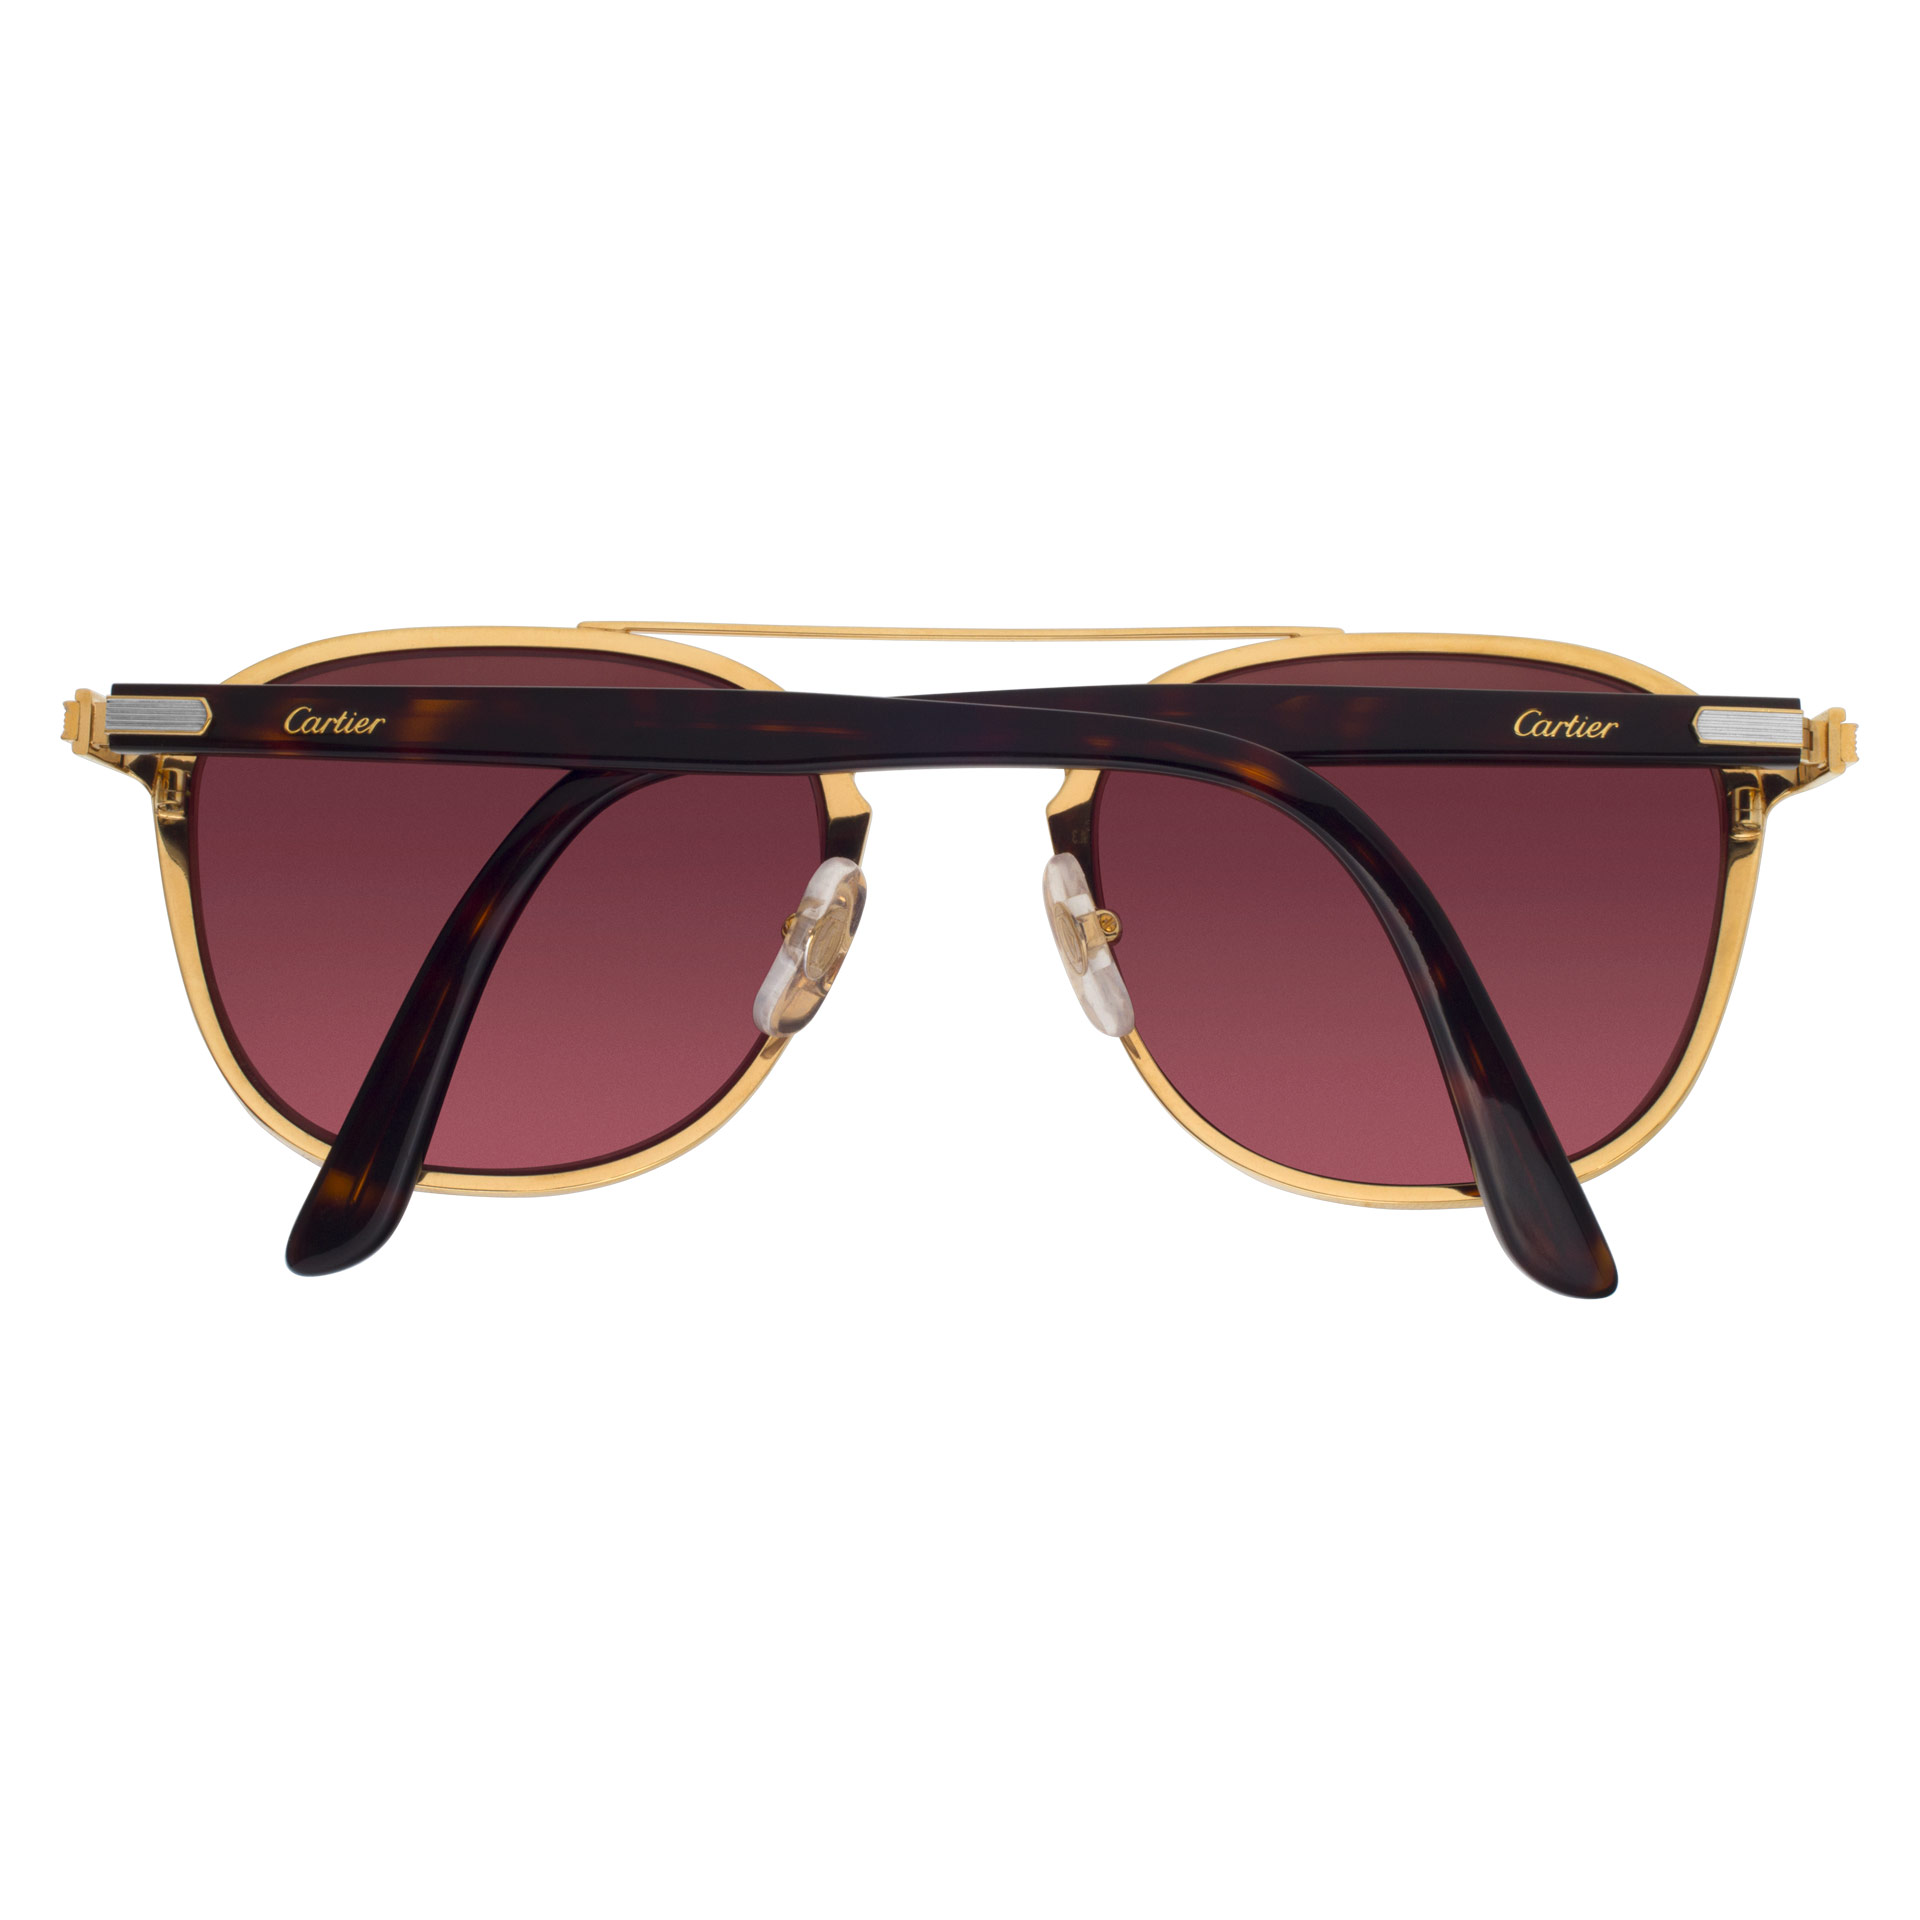 Cartier sunglasses image 6